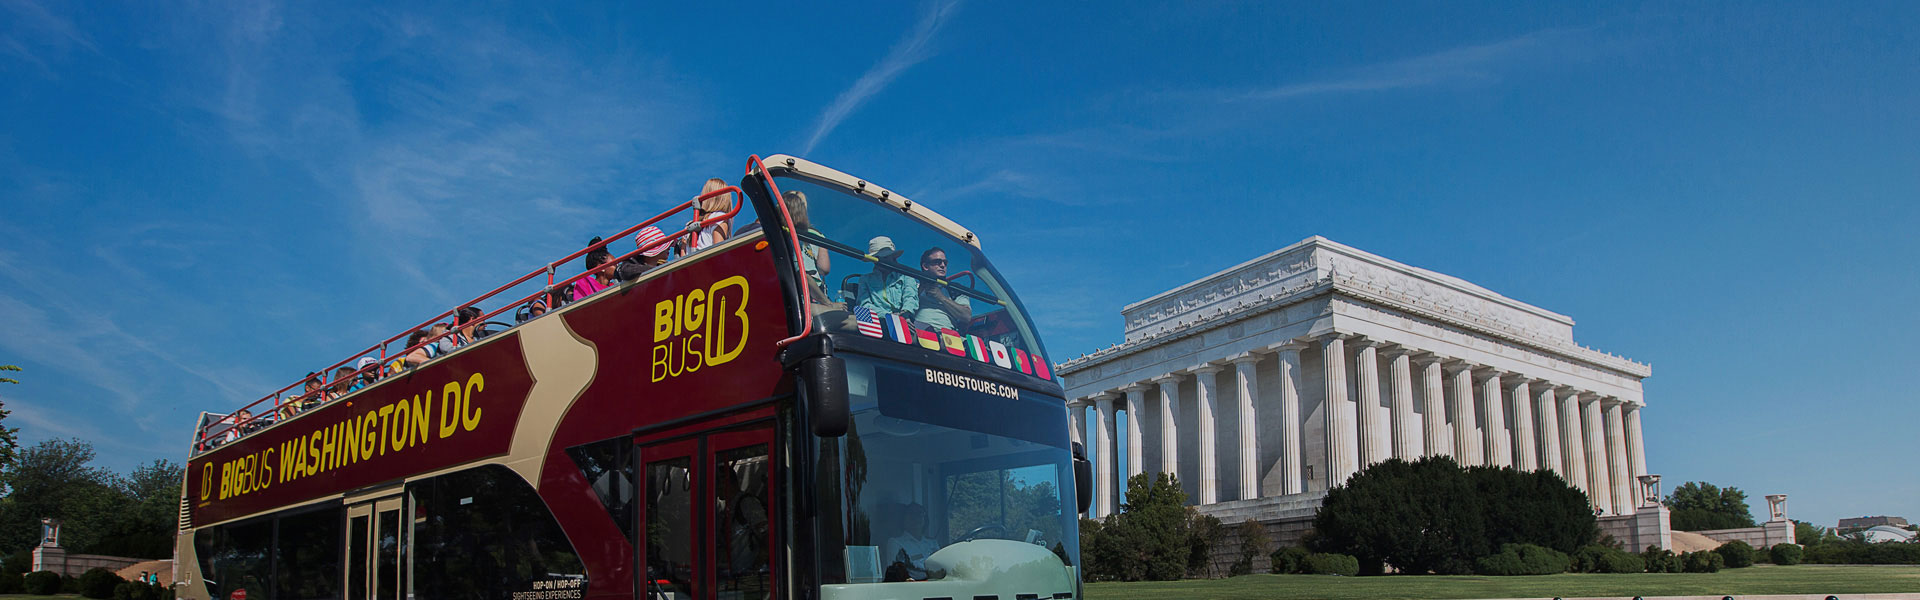 sandwich Brig Matematisk Washington DC Sightseeing Map | Big Bus Tours